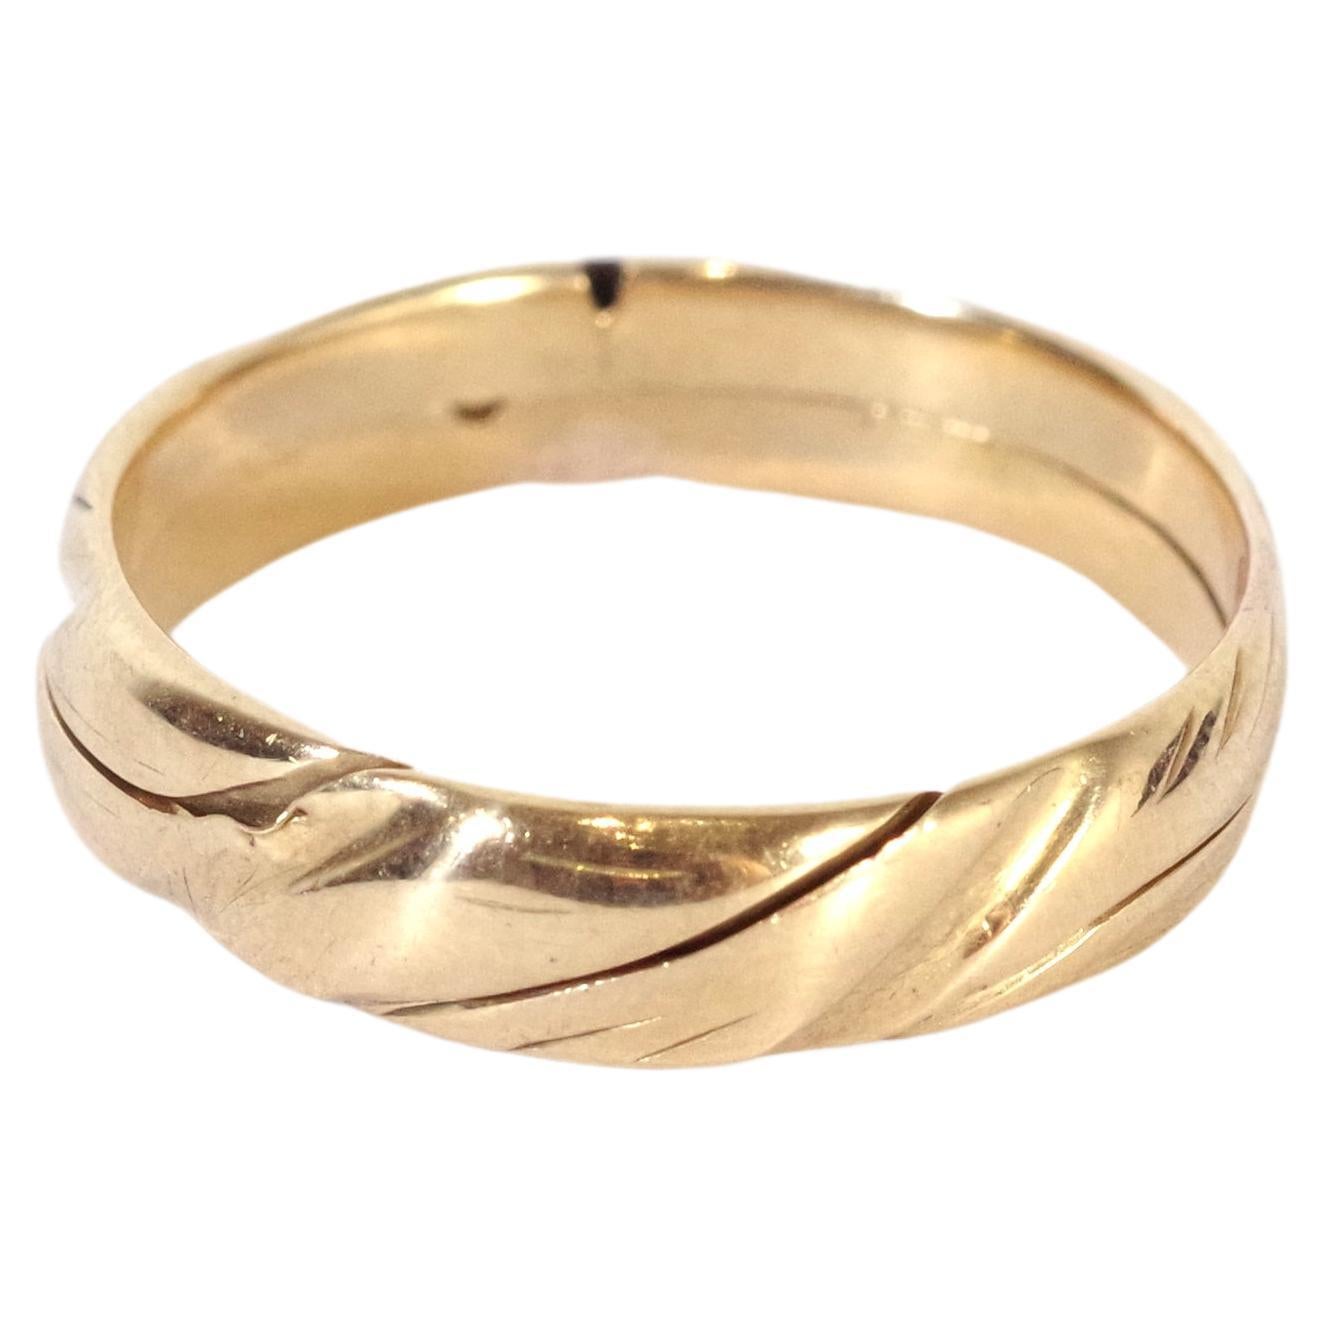 Antique gimmel ring in 18 karat rose gold